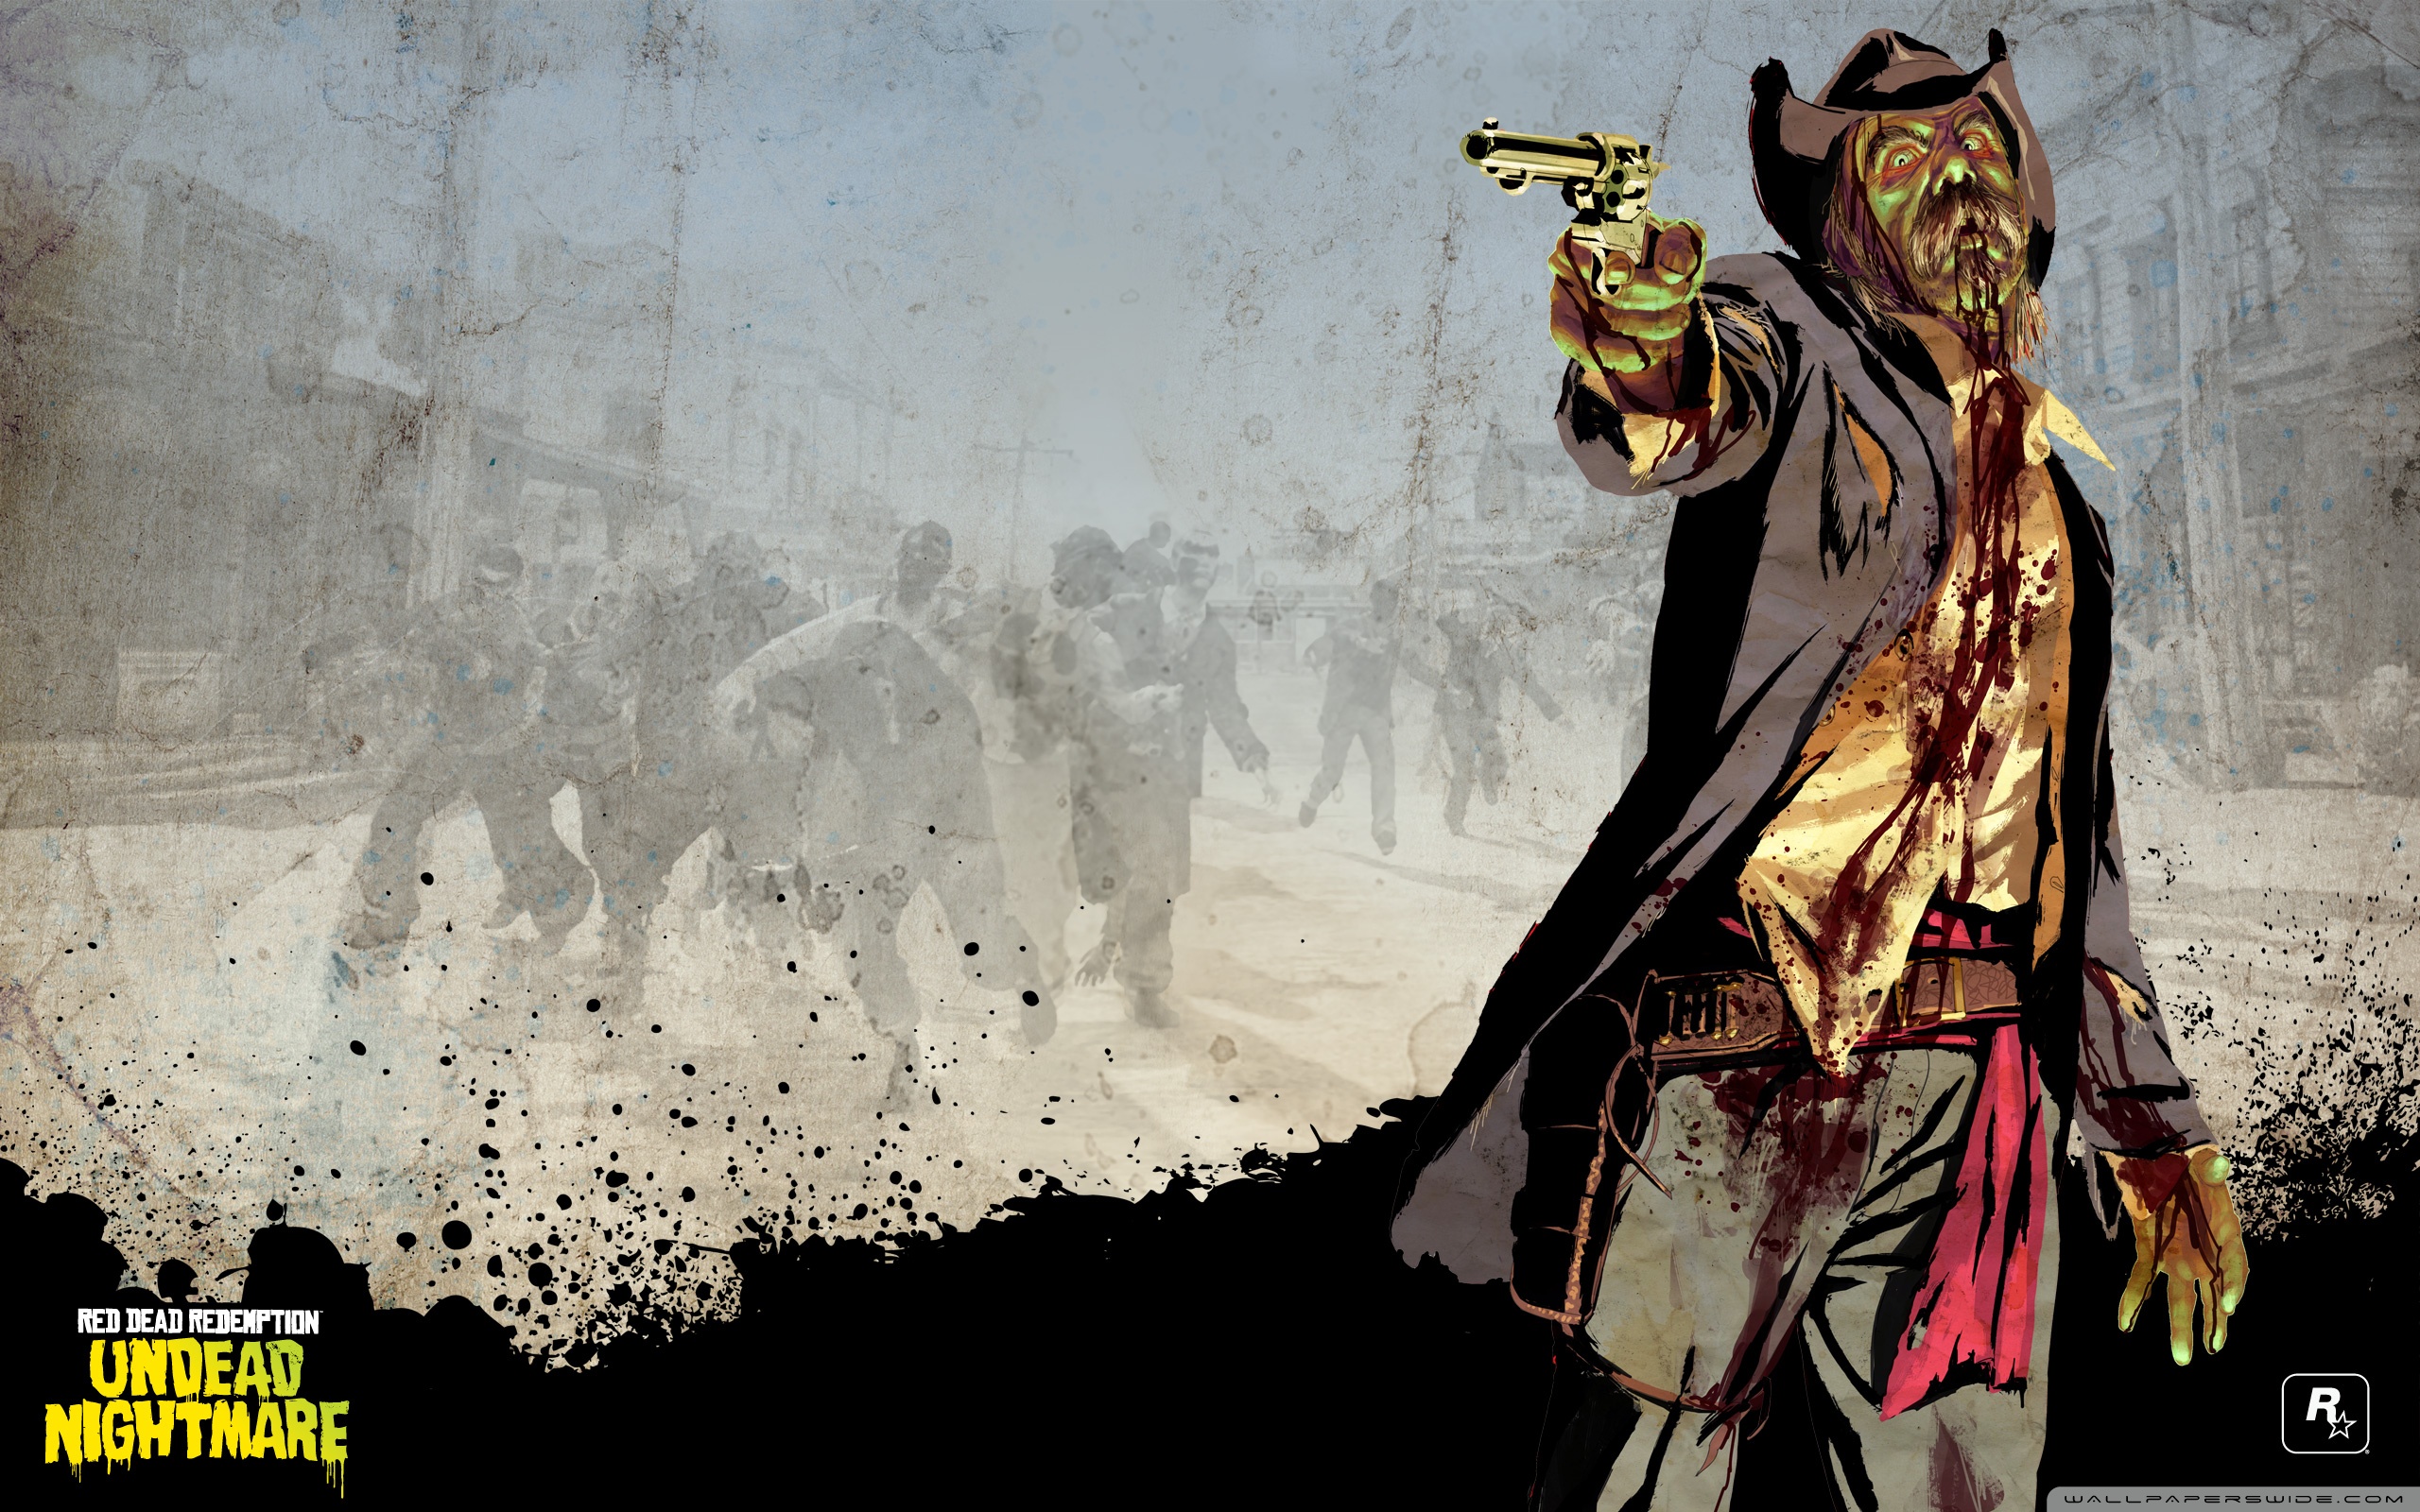 Red Dead Redemption: Undead Nightmare #17